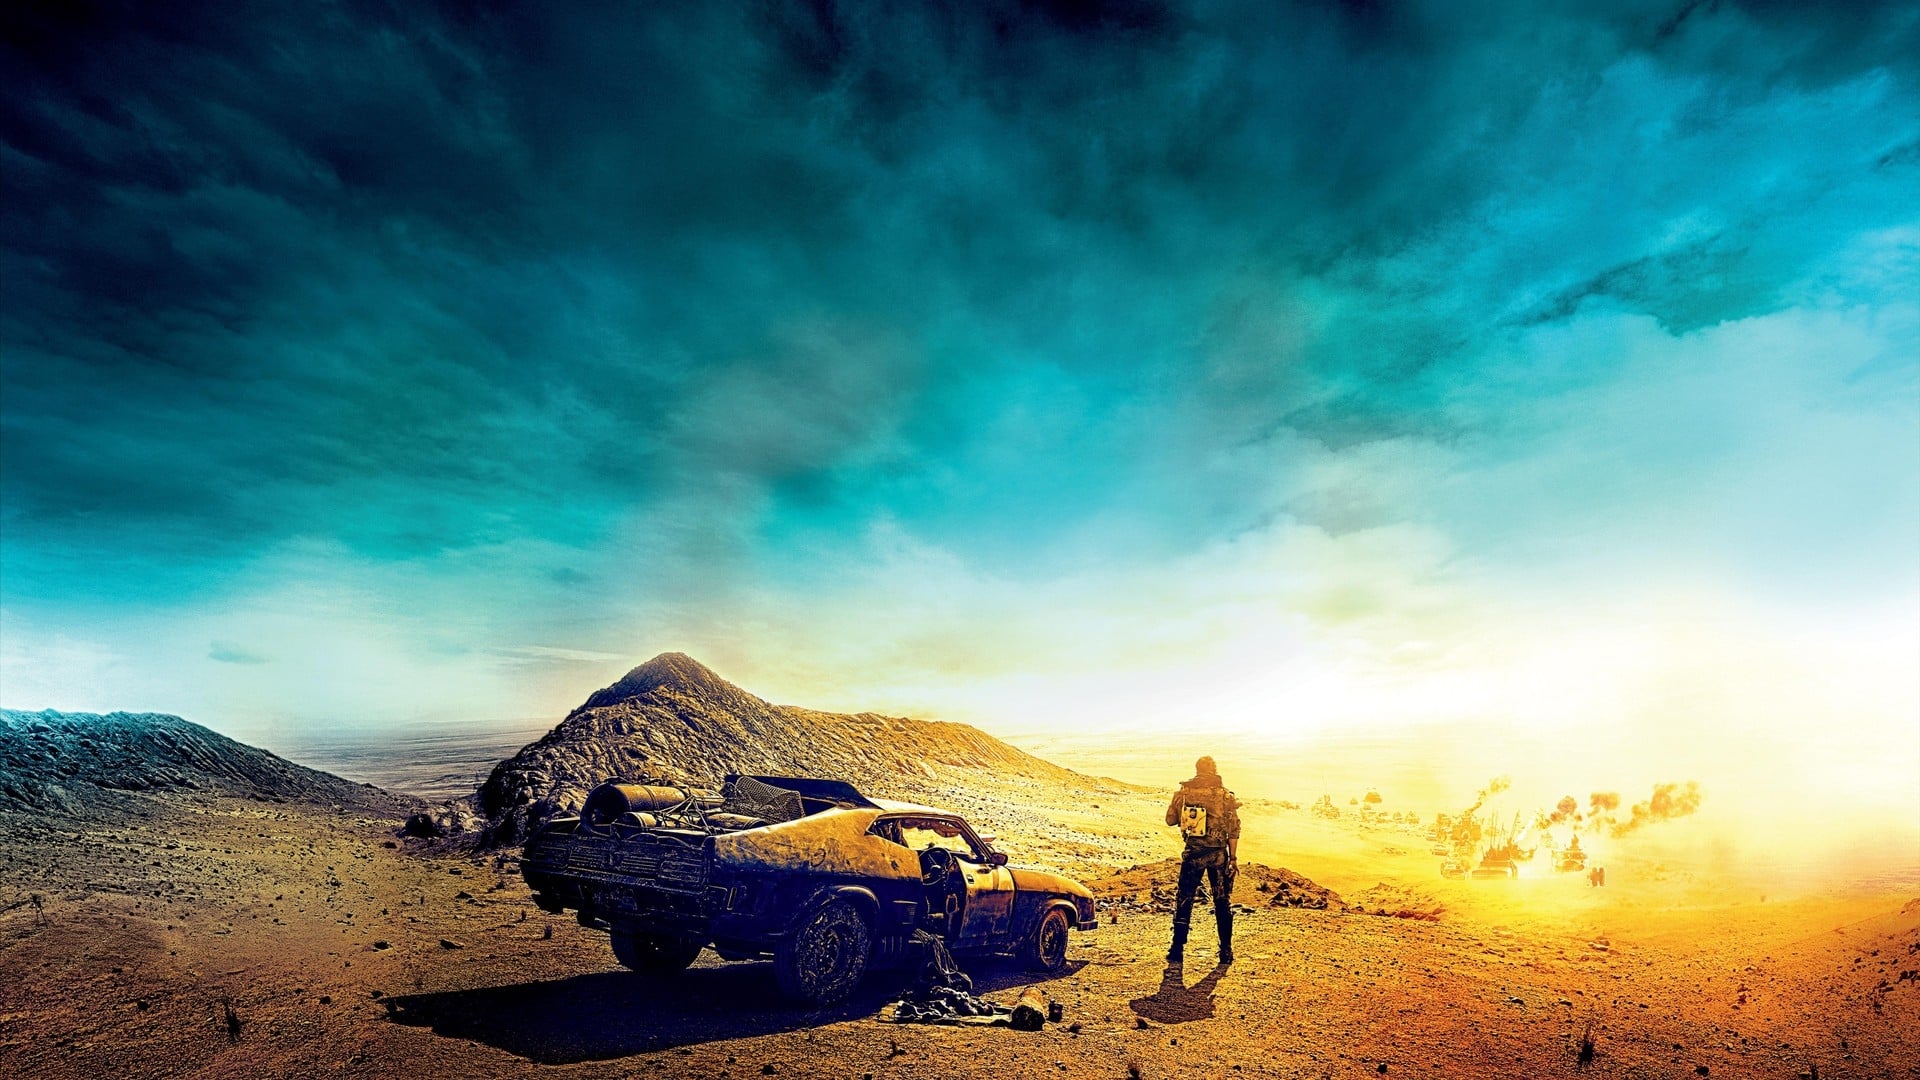 Image du film Mad Max : Fury Road - Black & Chrome dbuqjyqerim2grplvjtug0hdevijpg